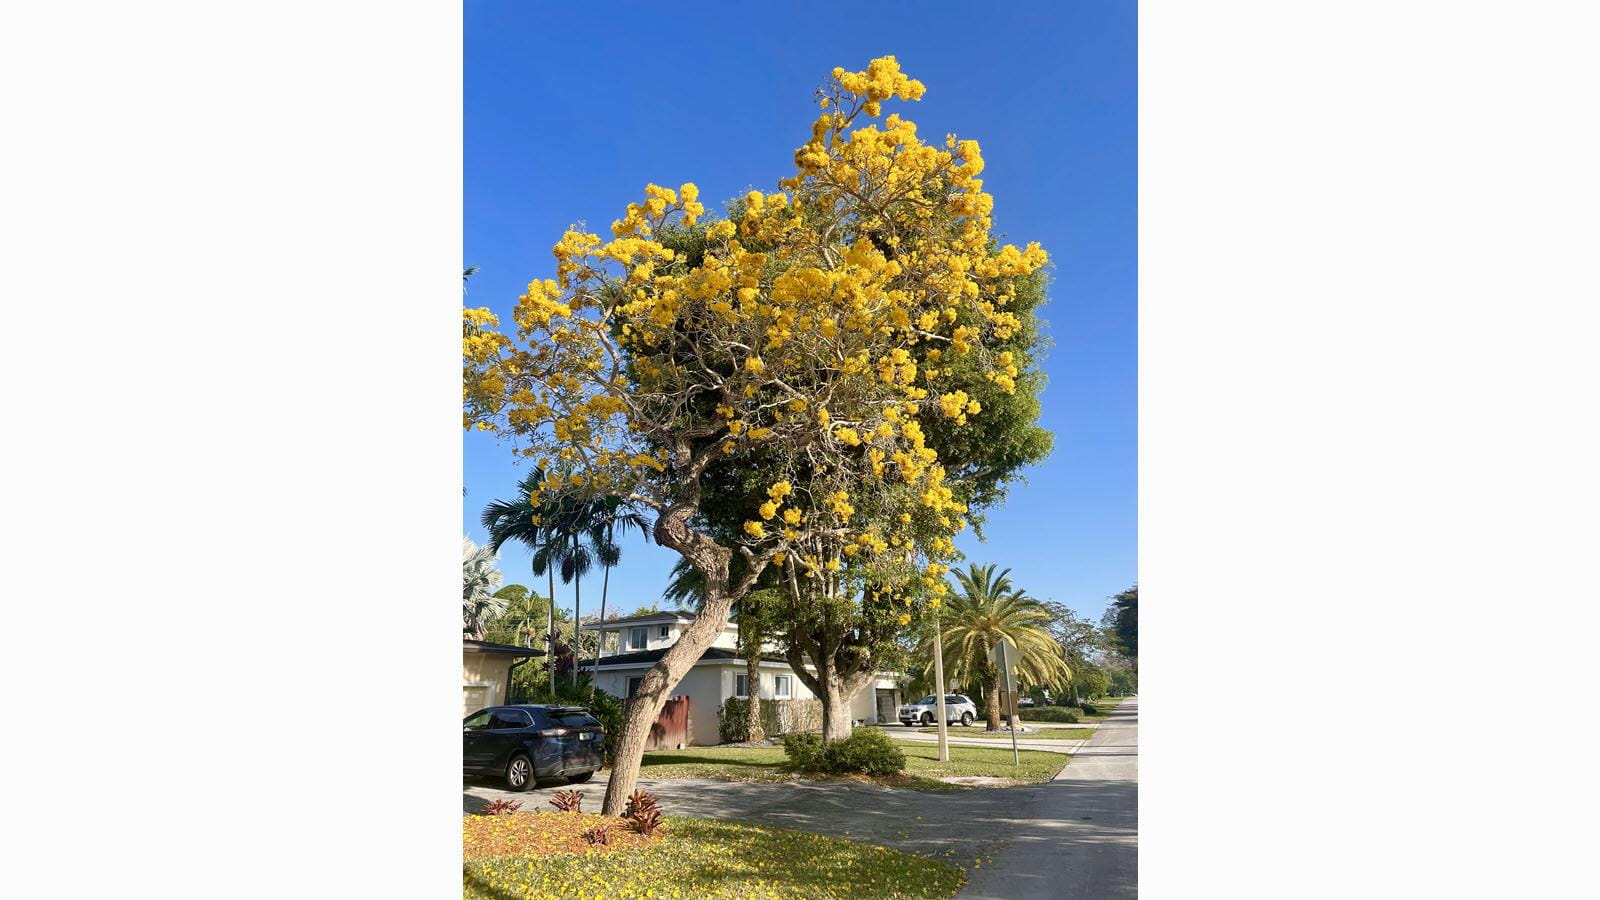 Tabebuia Tree in Miami, Florida